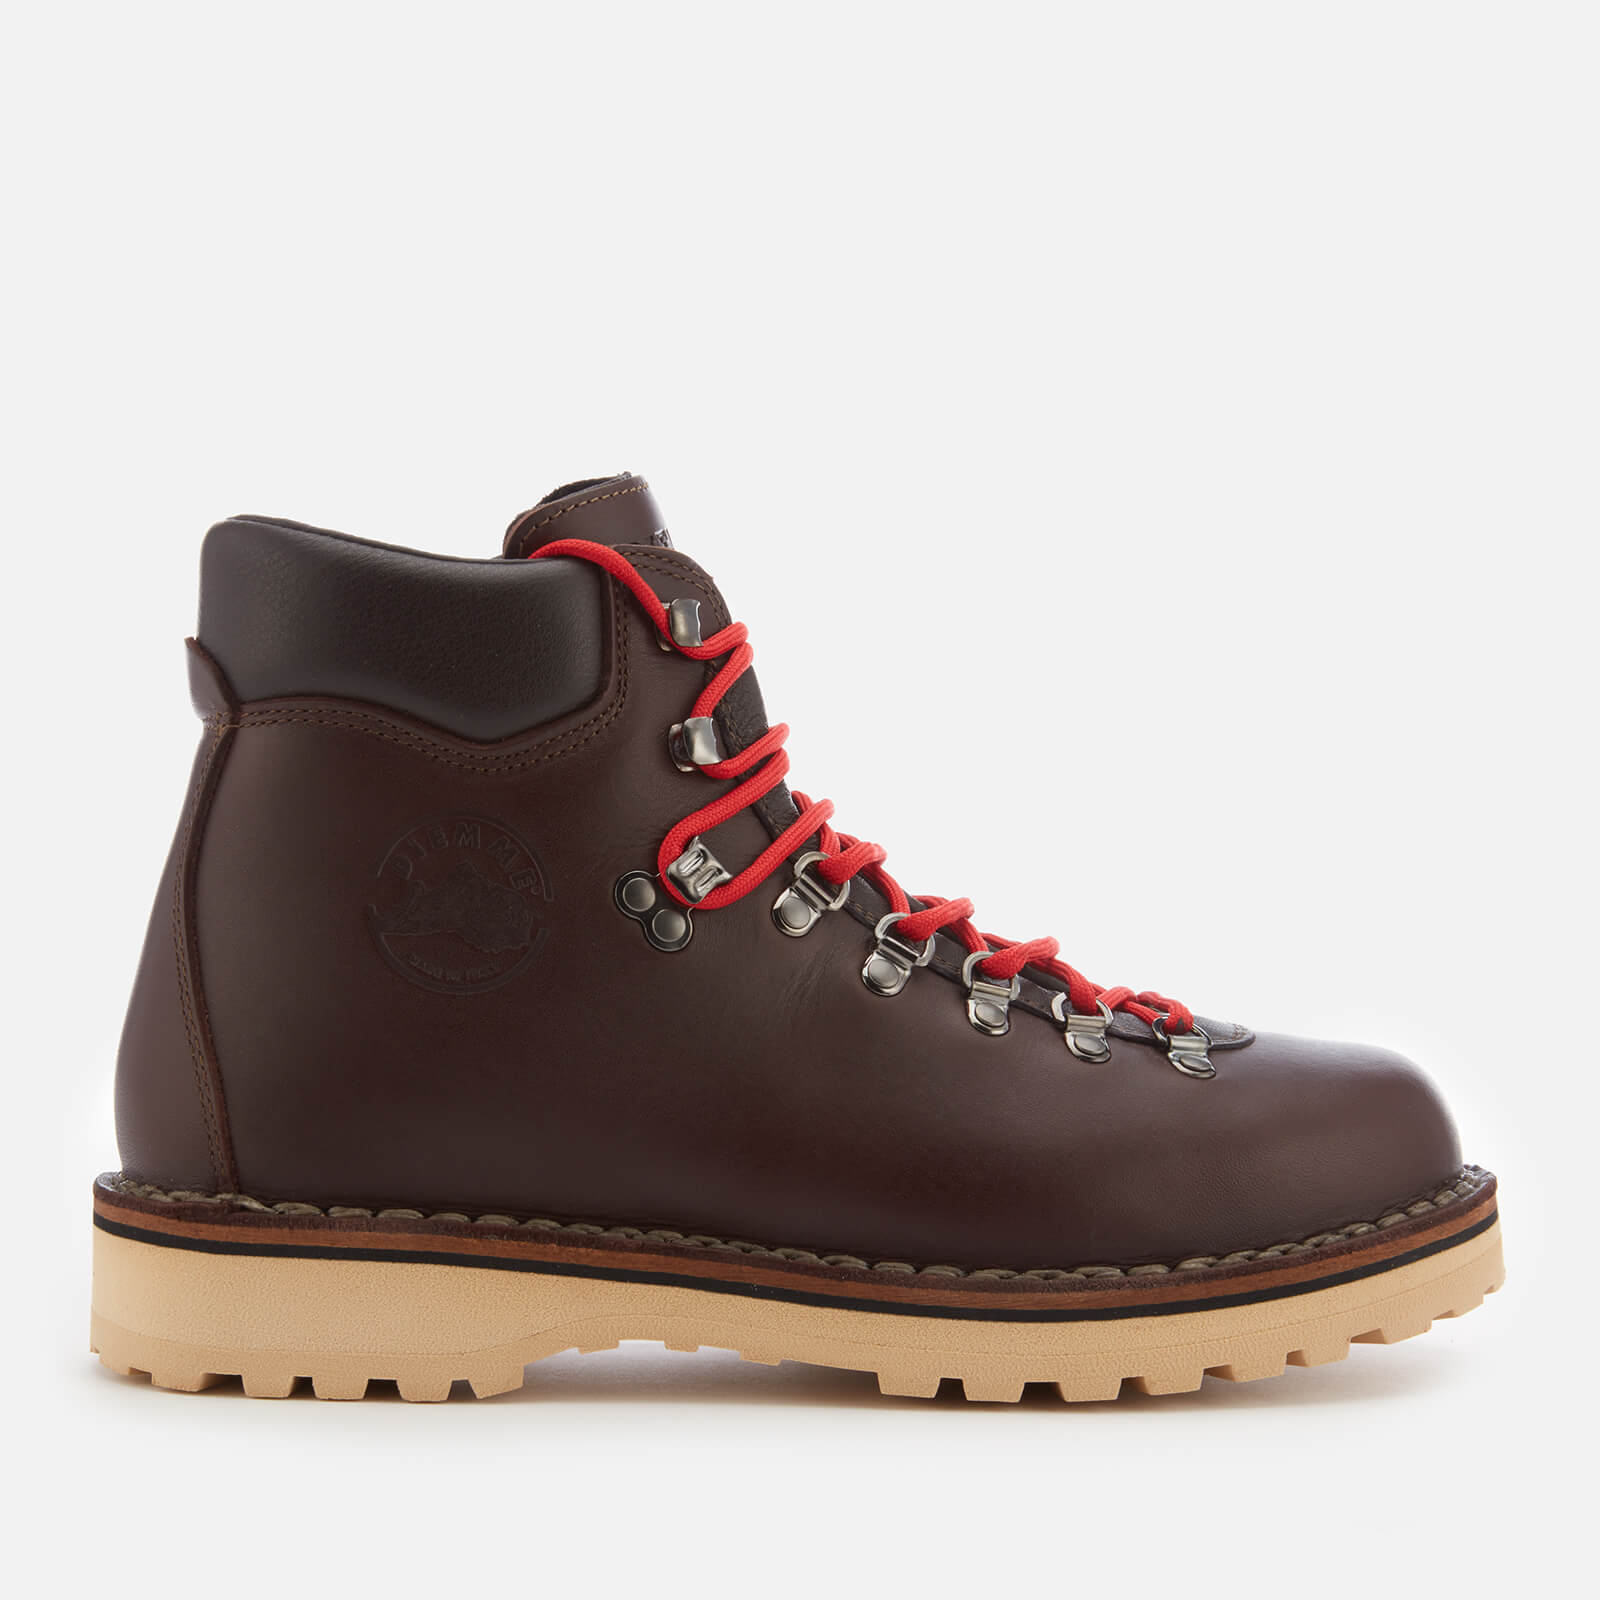 Diemme Roccia Vet Leather Hiking Style Boots - Mogano - UK 7.5/EU 41